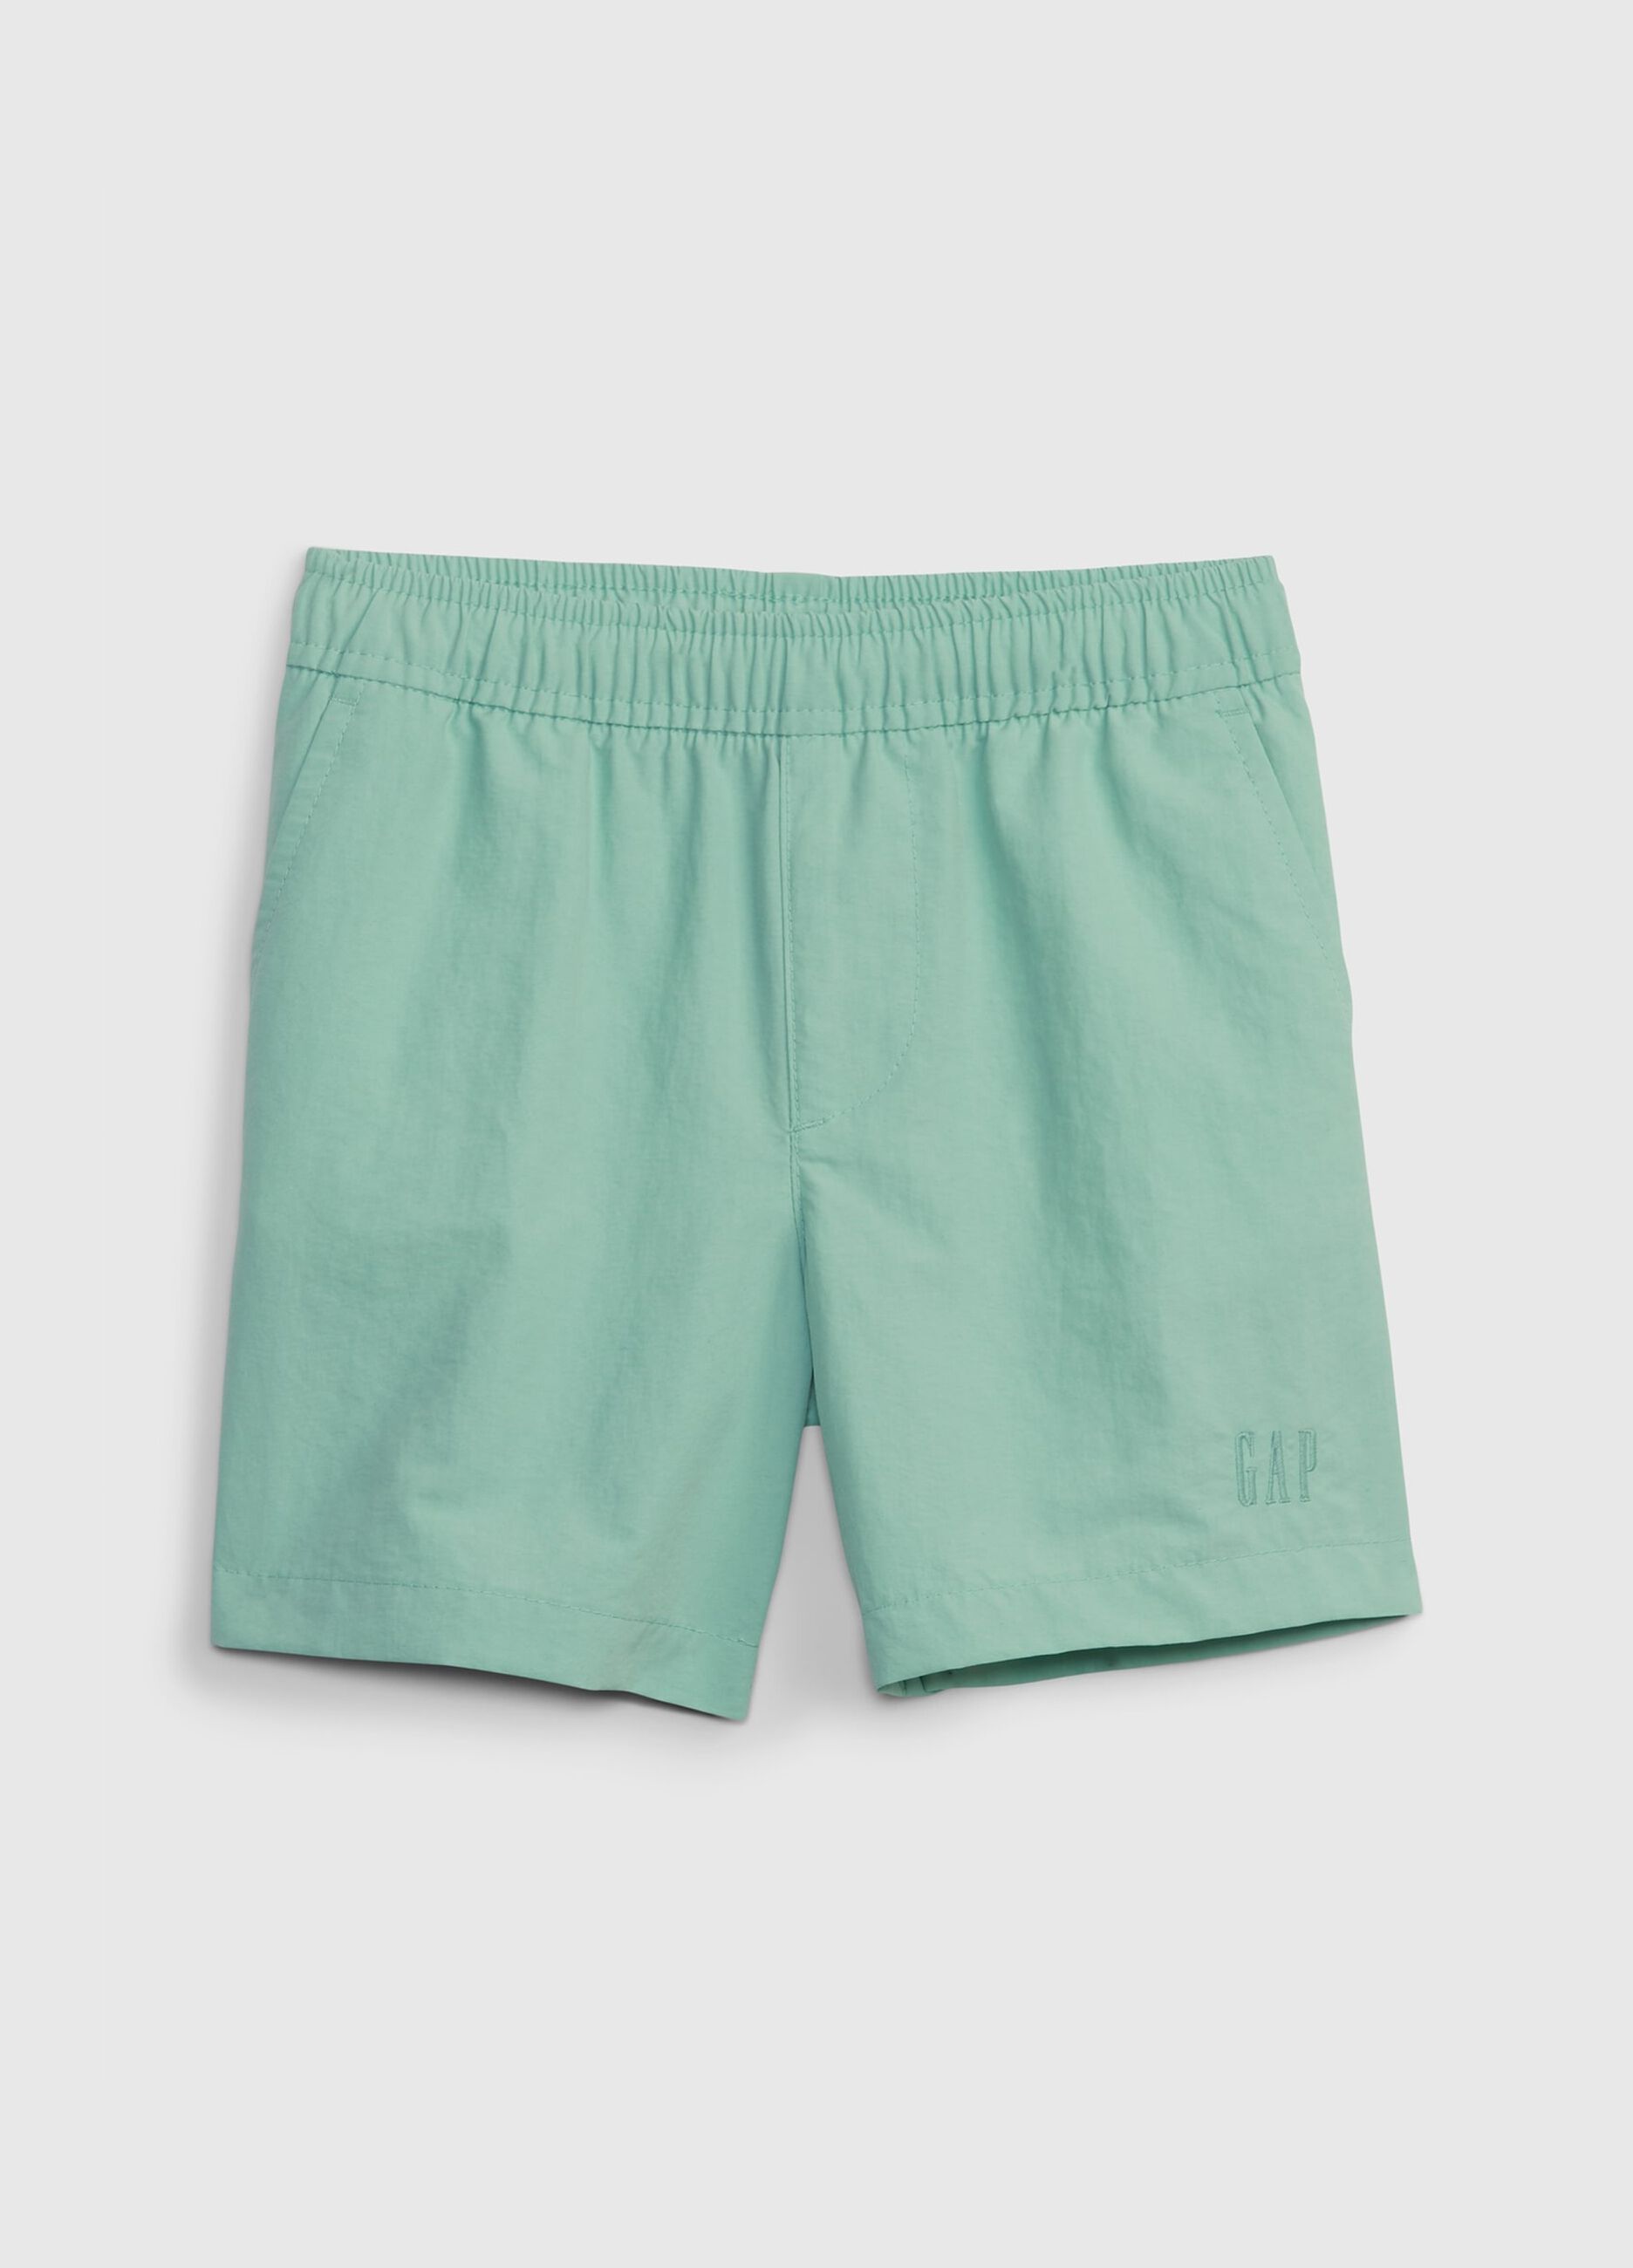 Bermuda shorts in technical fabric